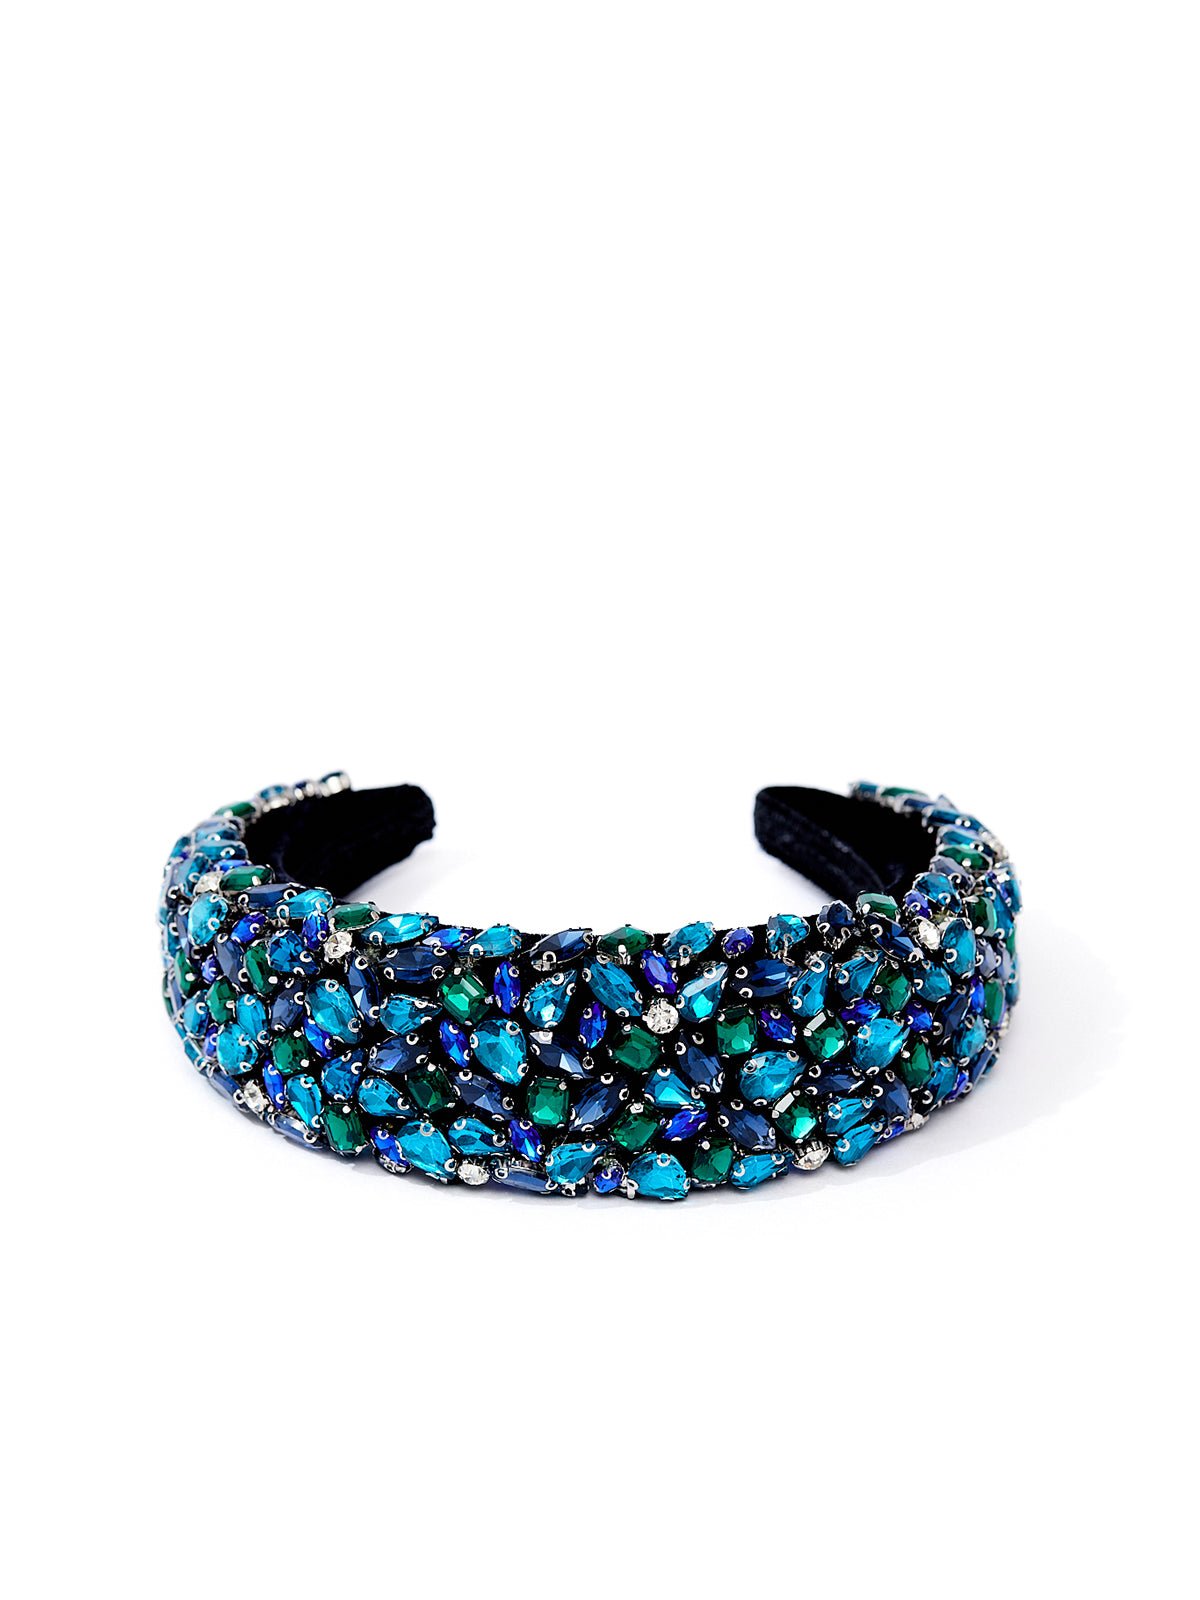 Sam Blue Headband by Montique